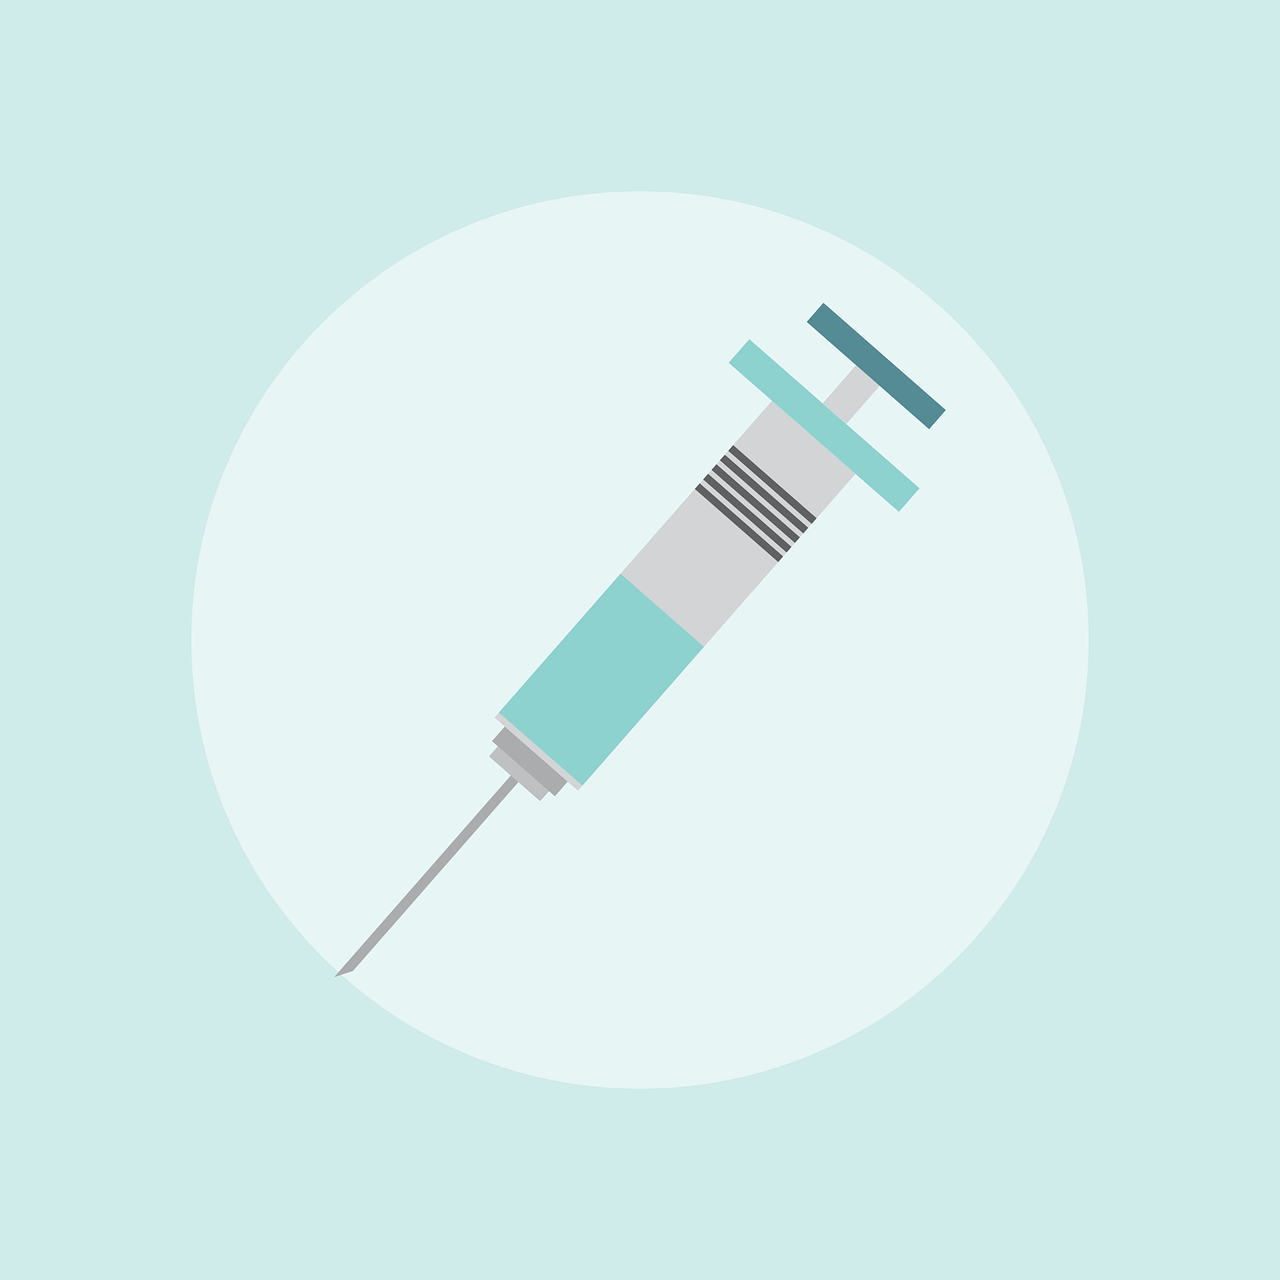 Exposing Anti-Vaxxers to Realities of Diseases Improves Attitude on Vaccines